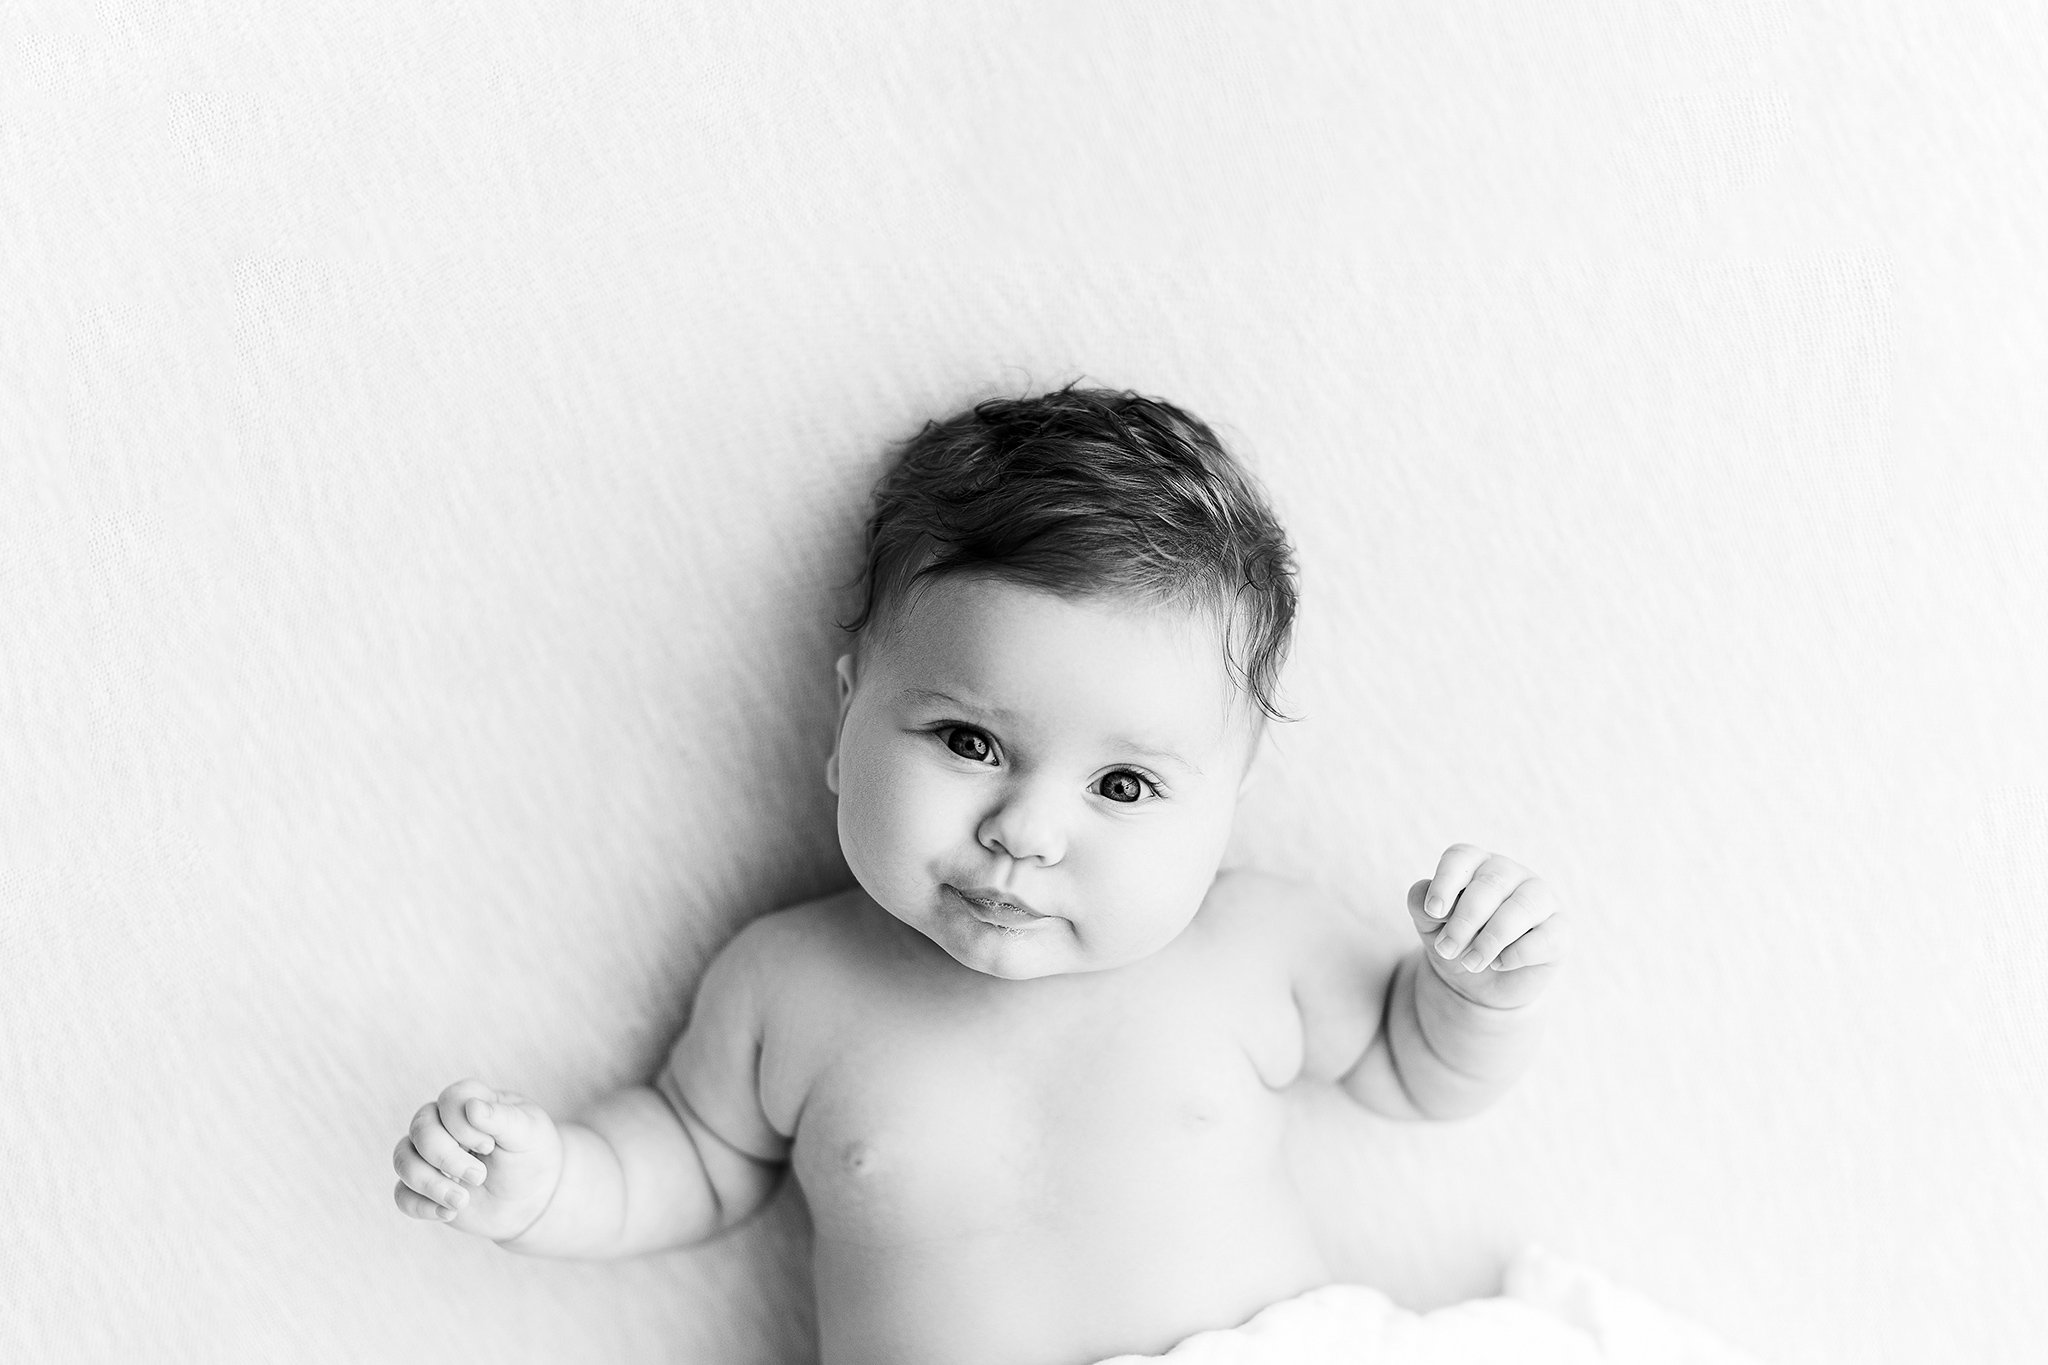 Allendale MI Newborn Photography, Newborn Photographer Near Me, Baby Photographer Allendale MI, Maternity Photography Allendale MI, maternity portraits, newborn portraits